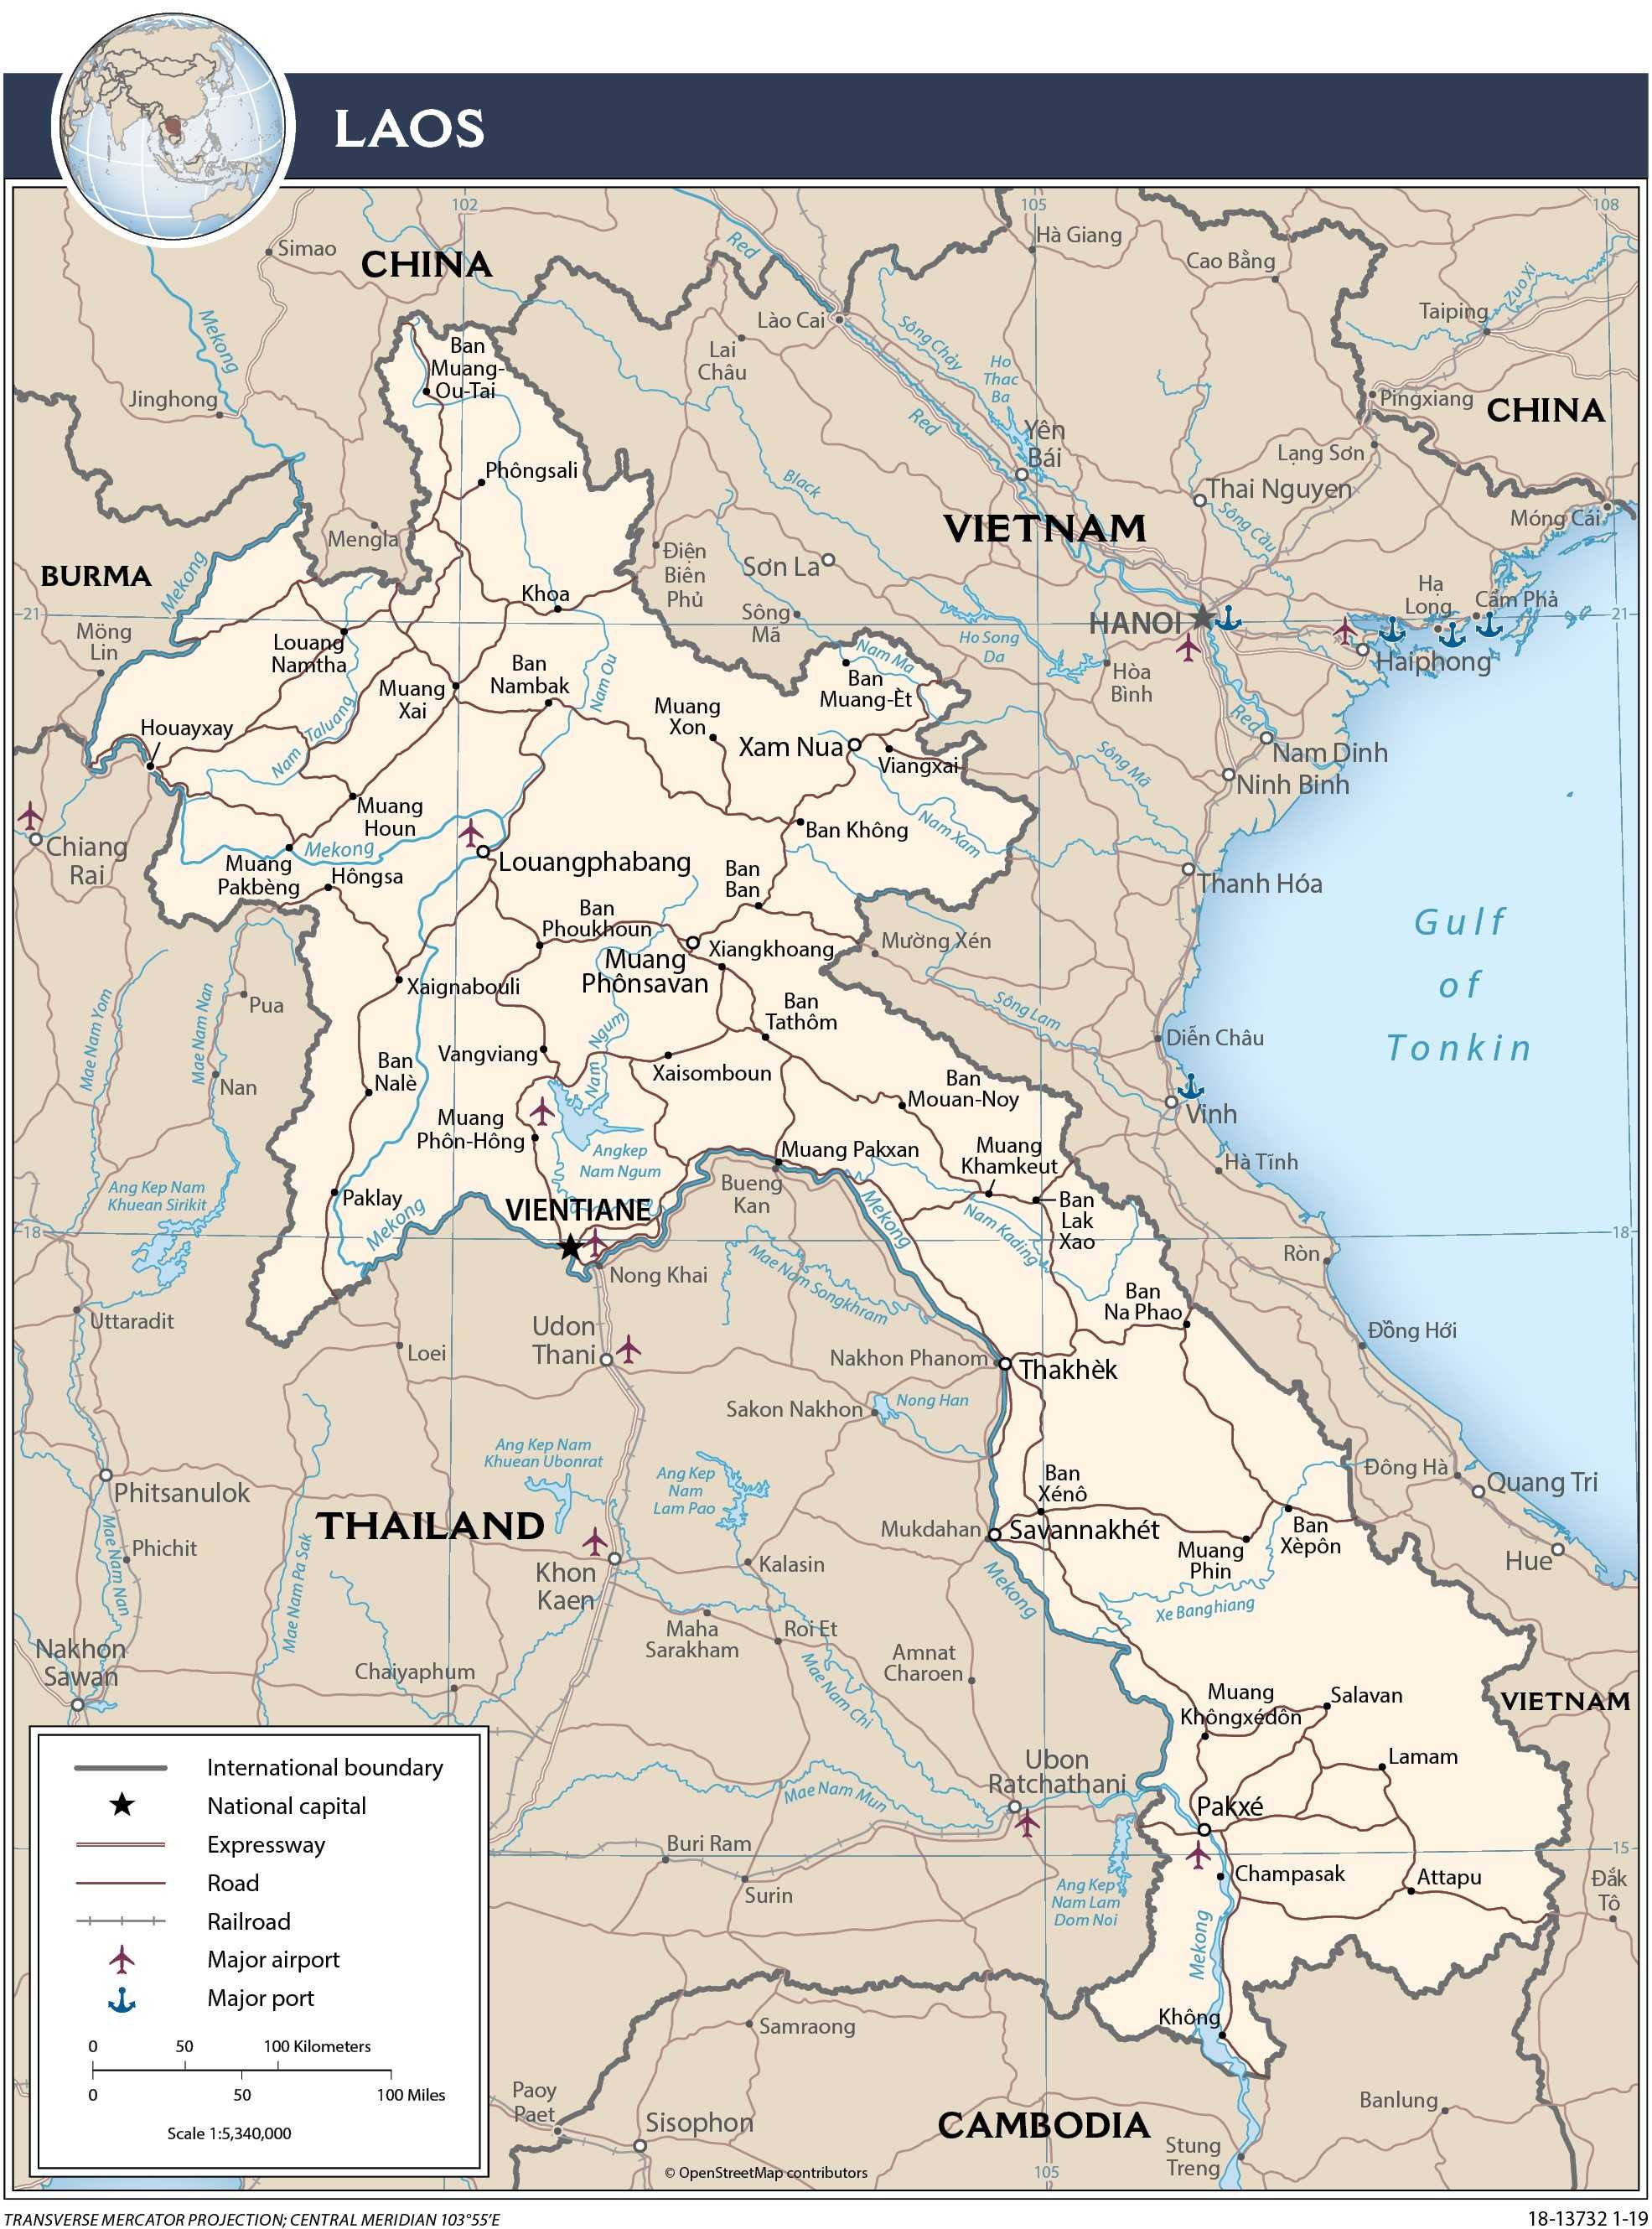 Transportation map of Laos.